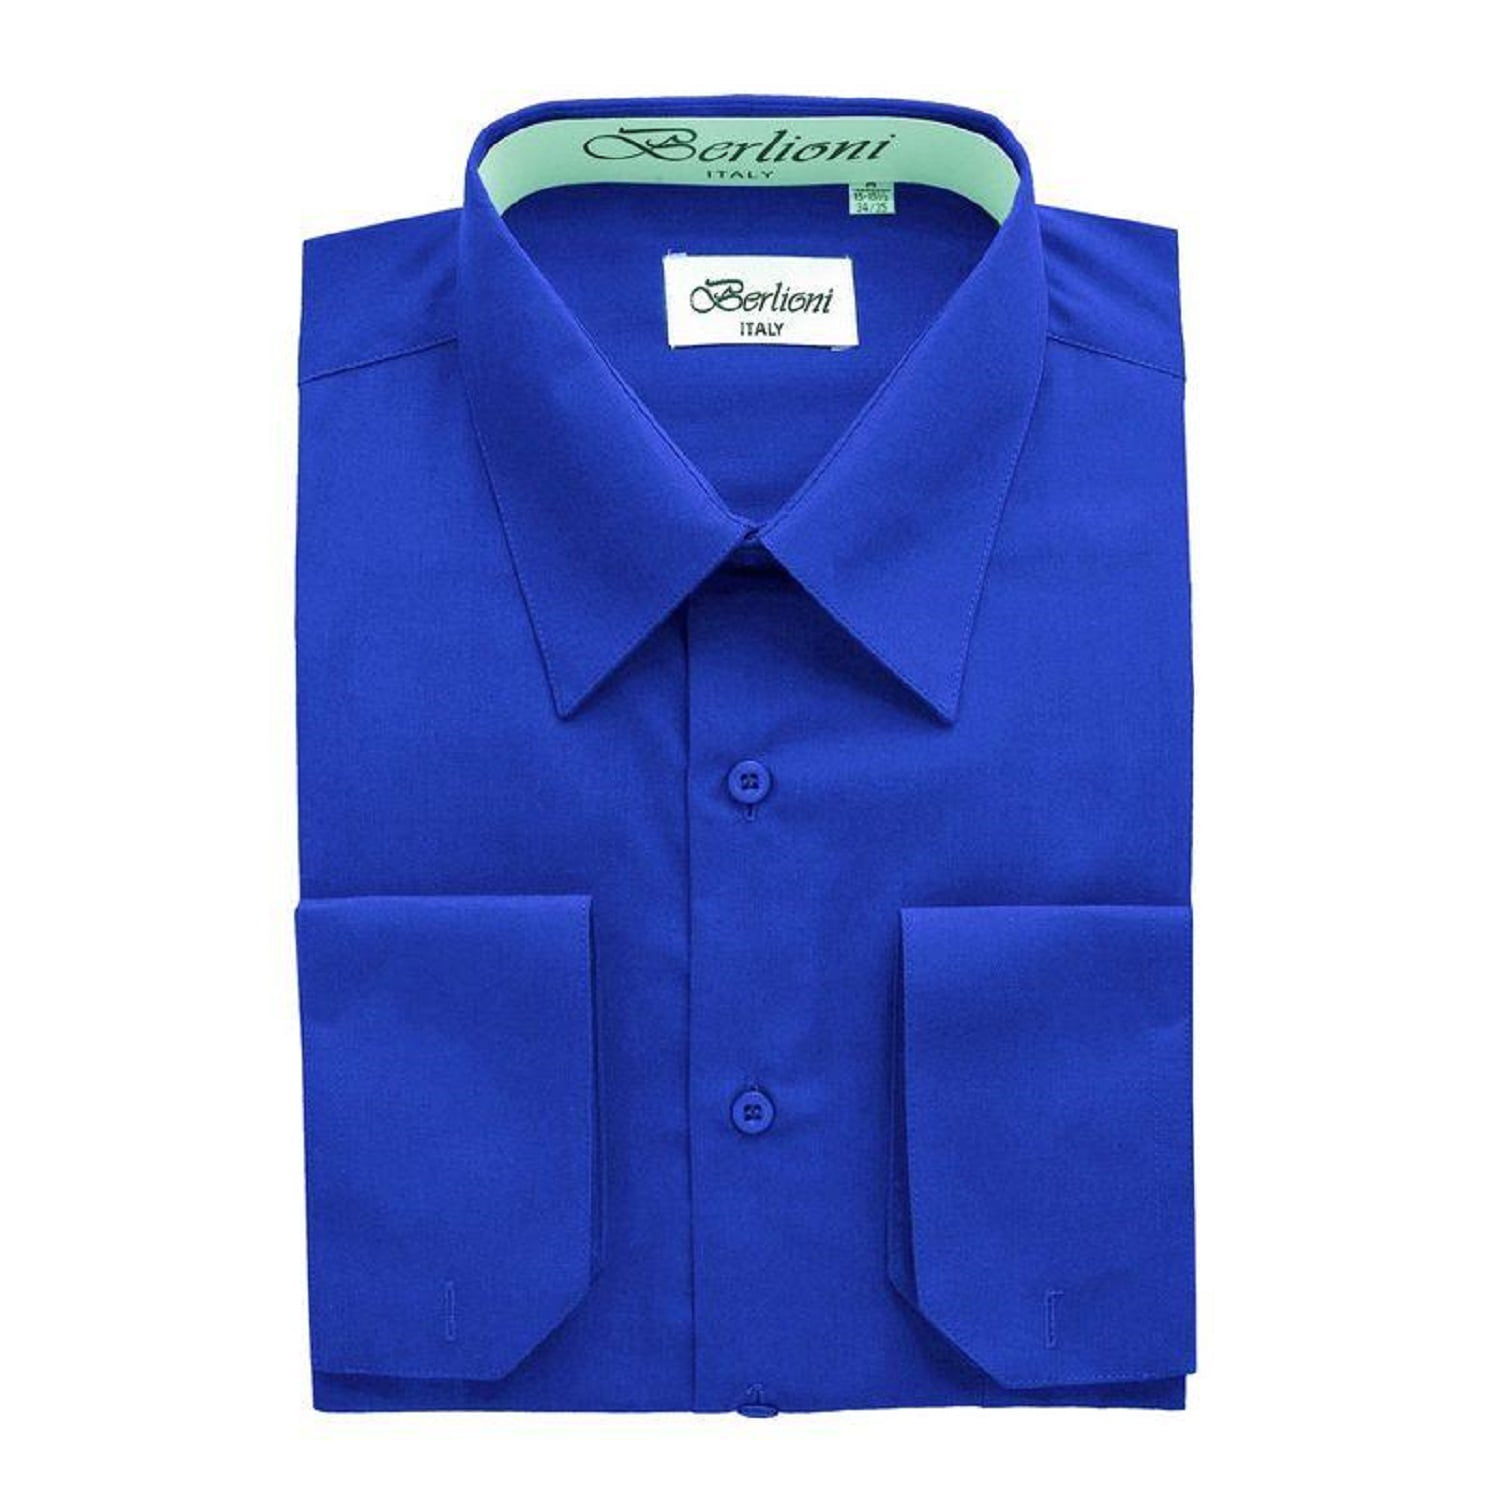 Black Cotton Collar Extender Business Shirt Blouse Cuff Extension Neck Size Tie 